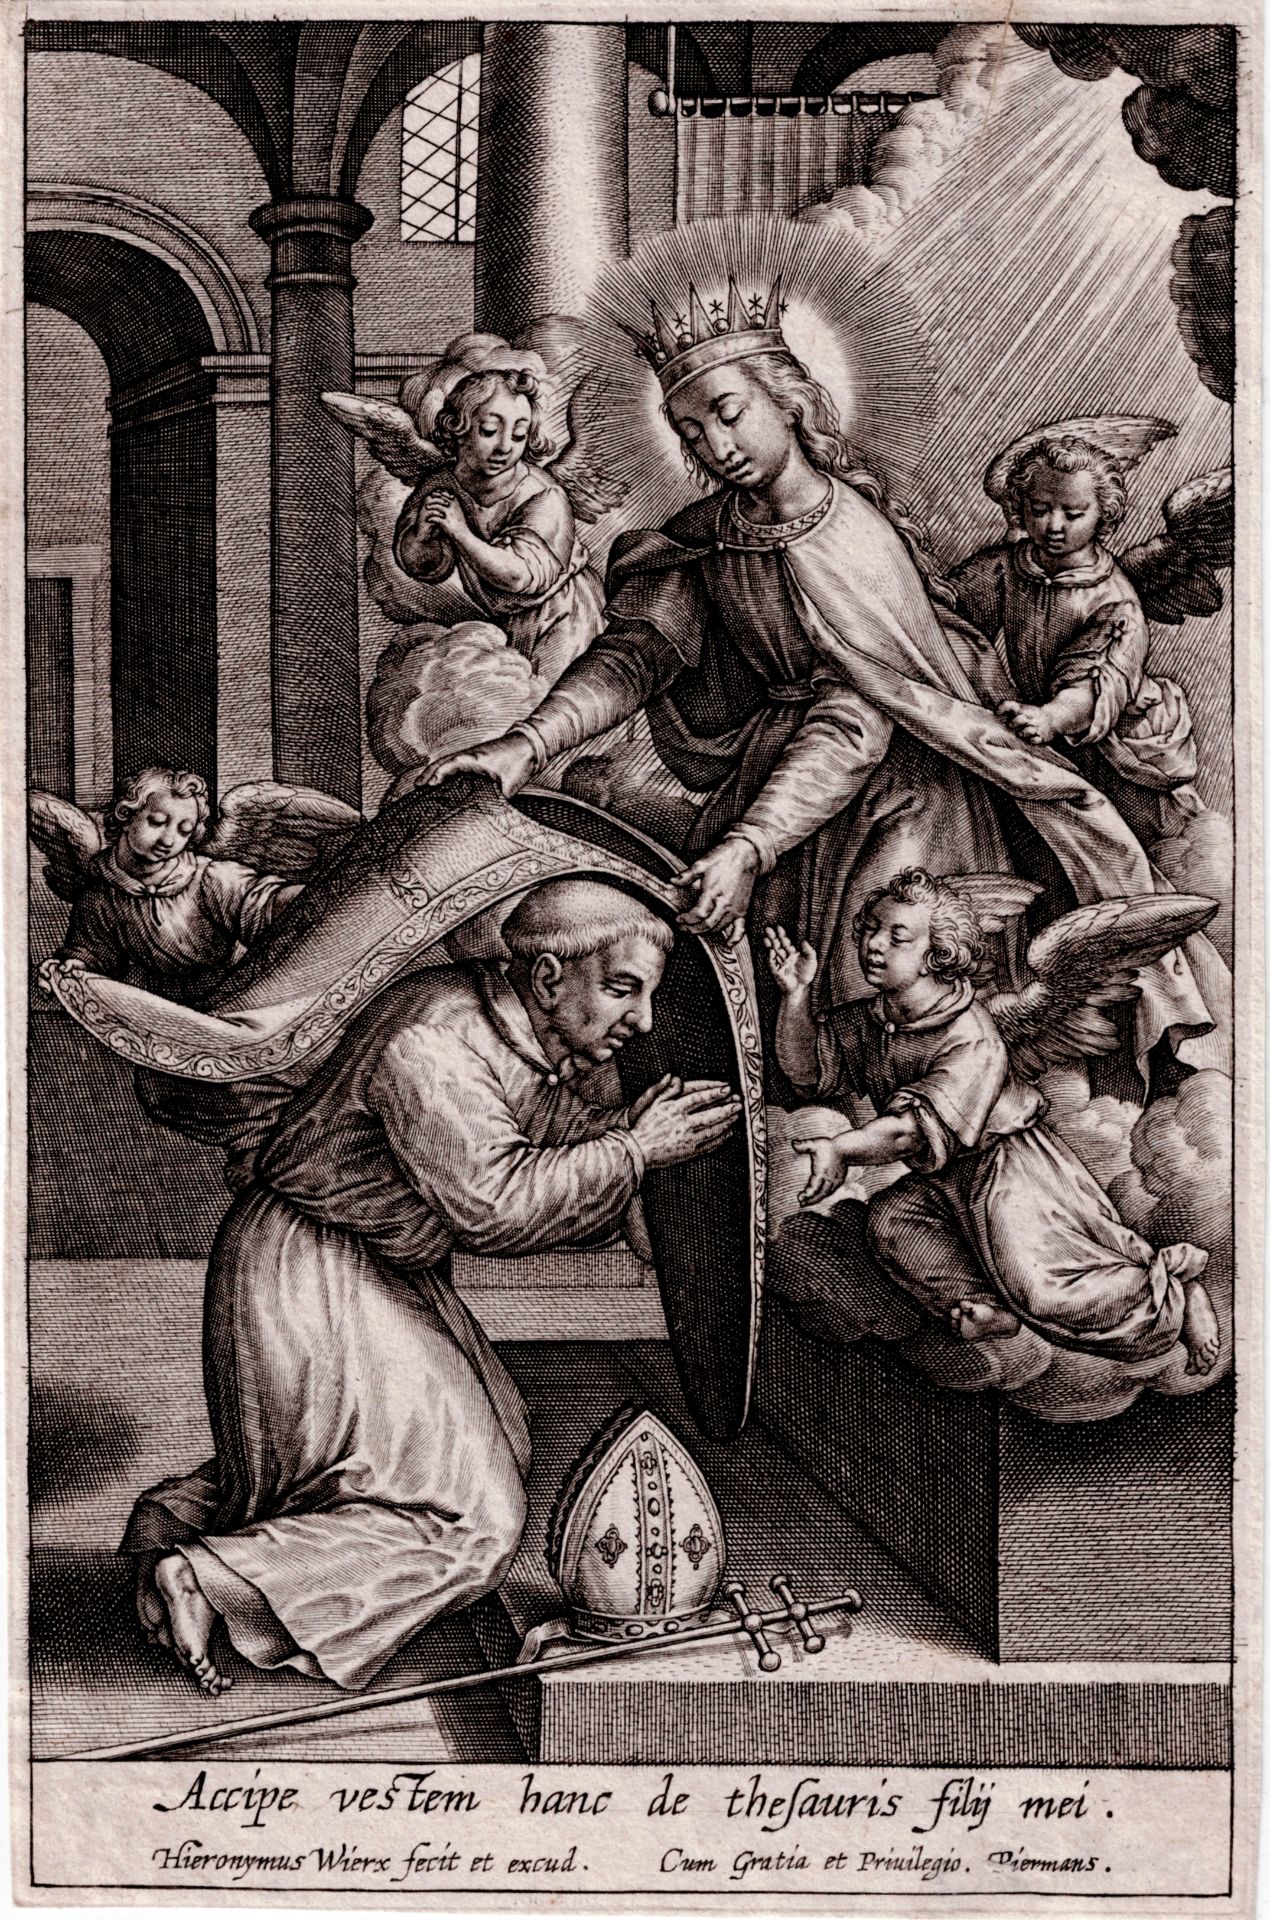 Hieronymus Wierix (1553-1619)